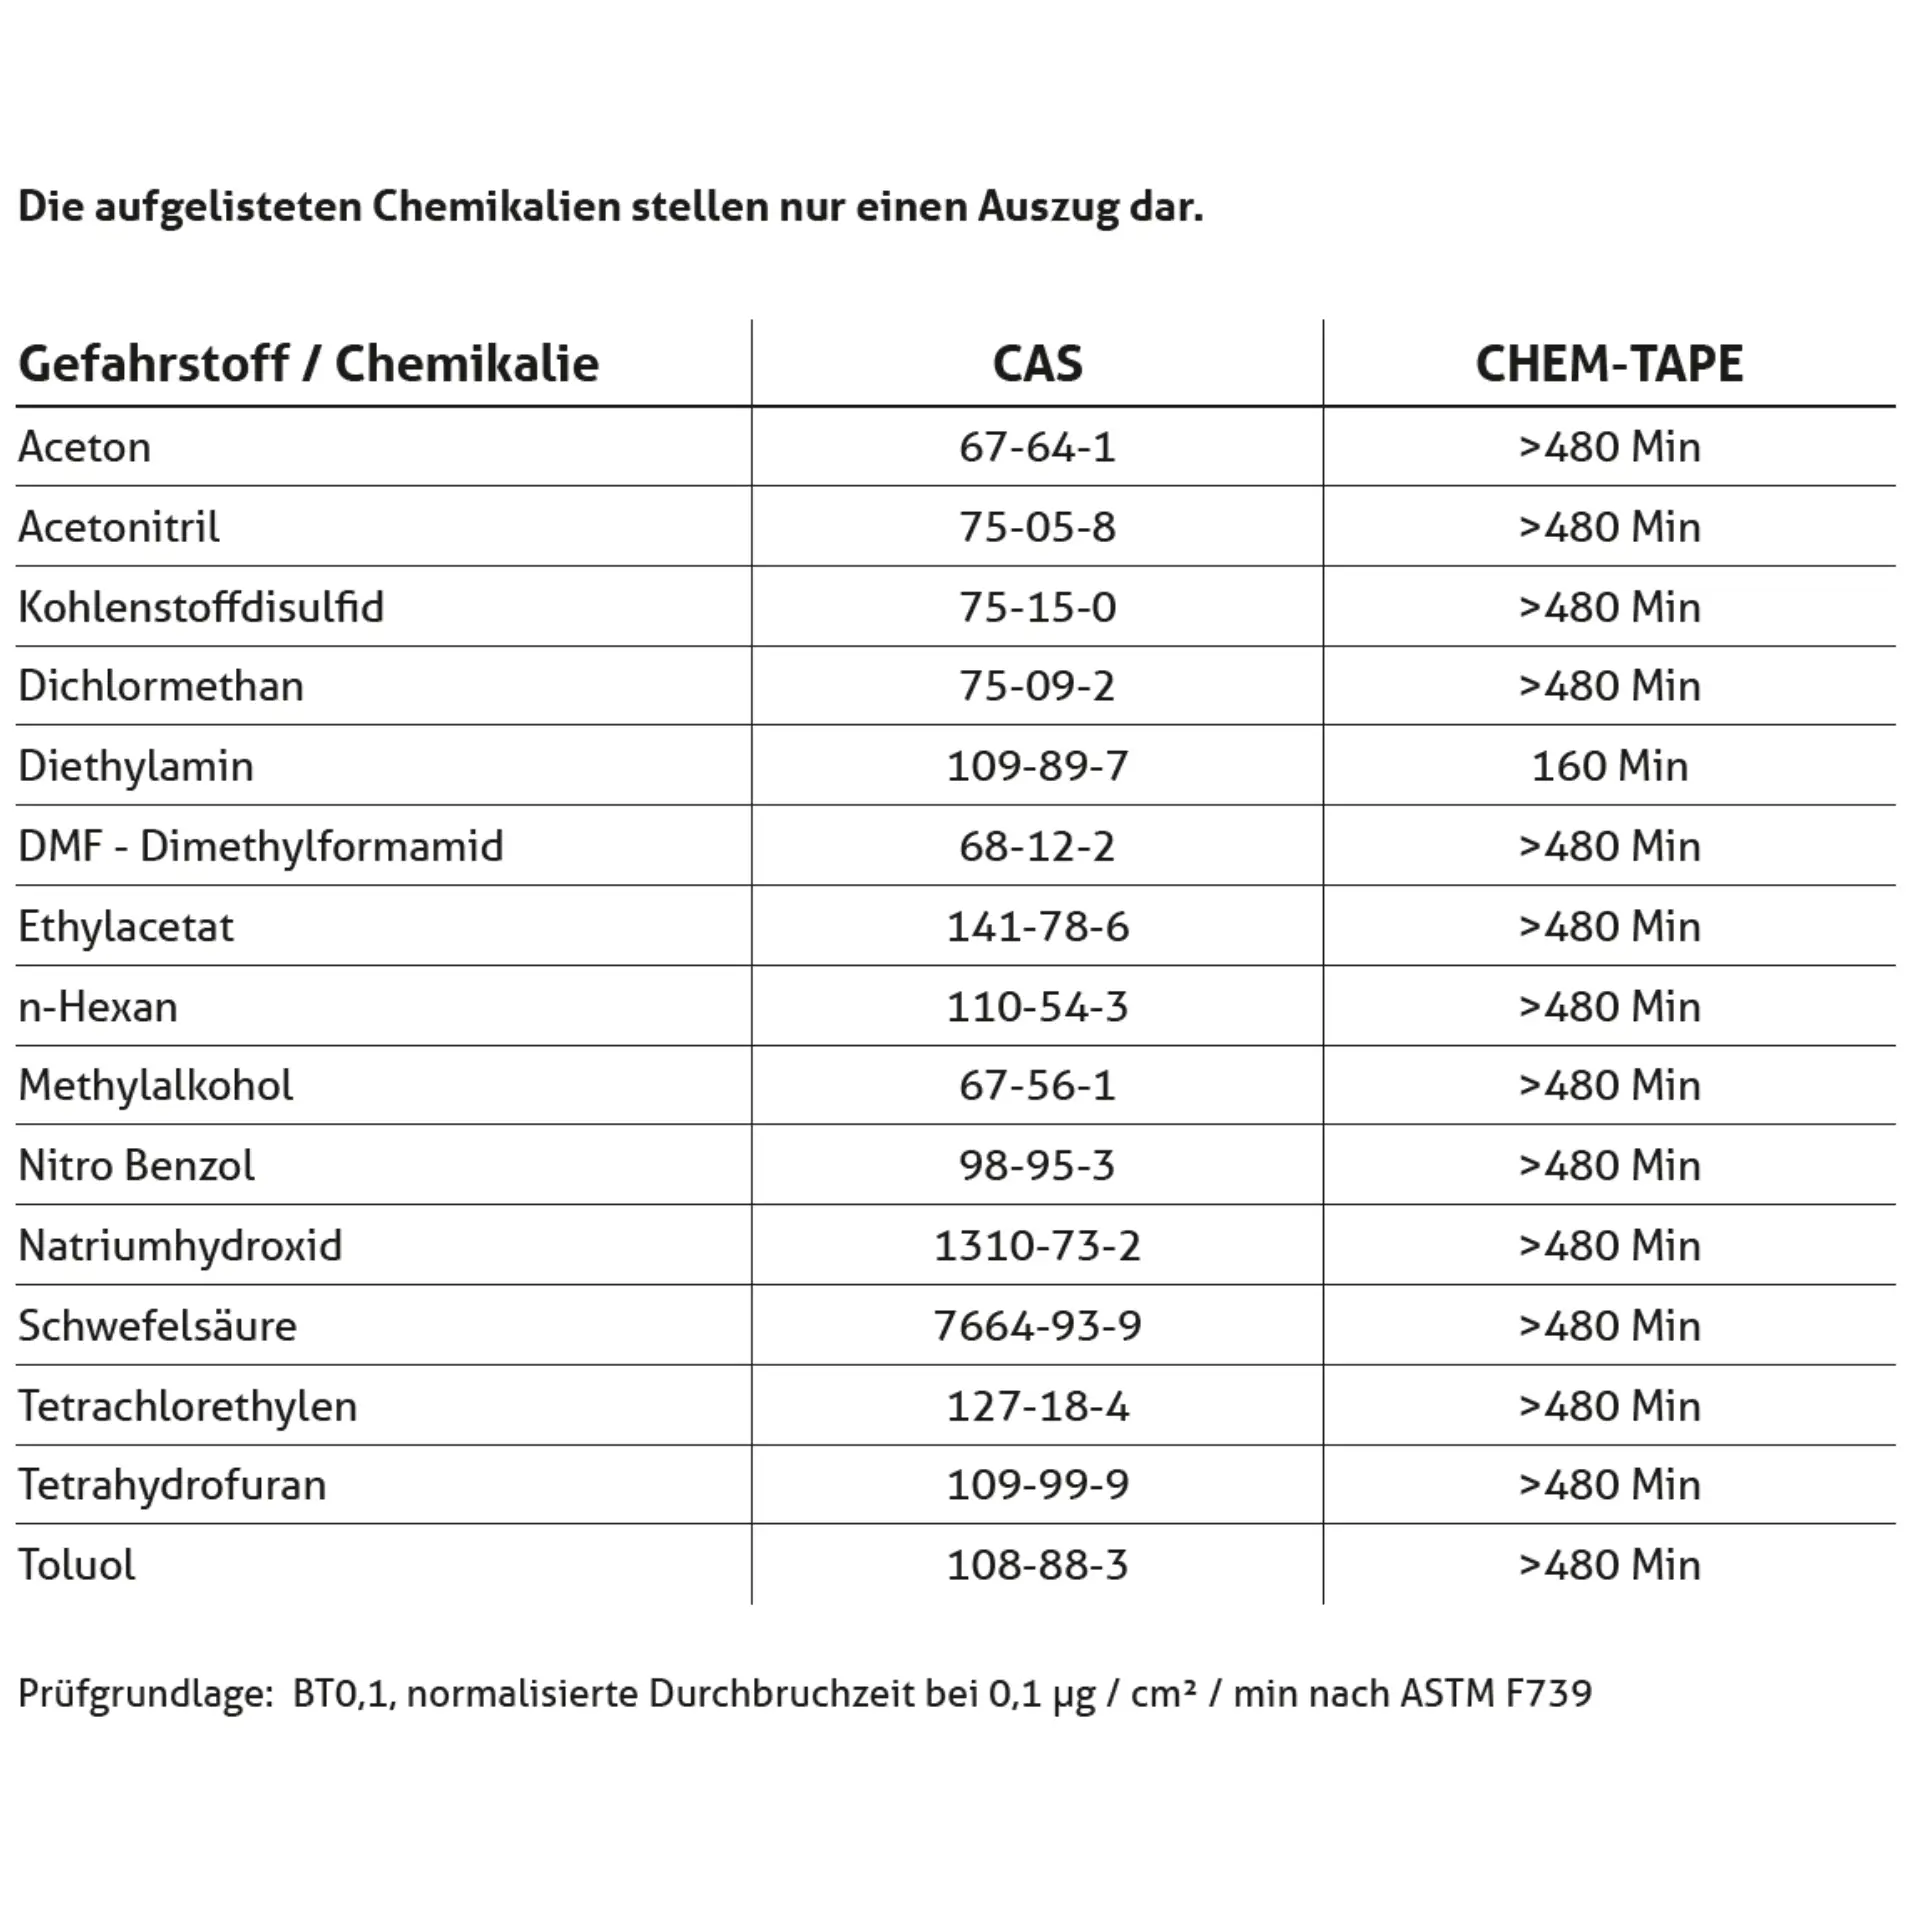 Imagen de producto Chem-Tape® Cinta adhesiva impermeable a químicos